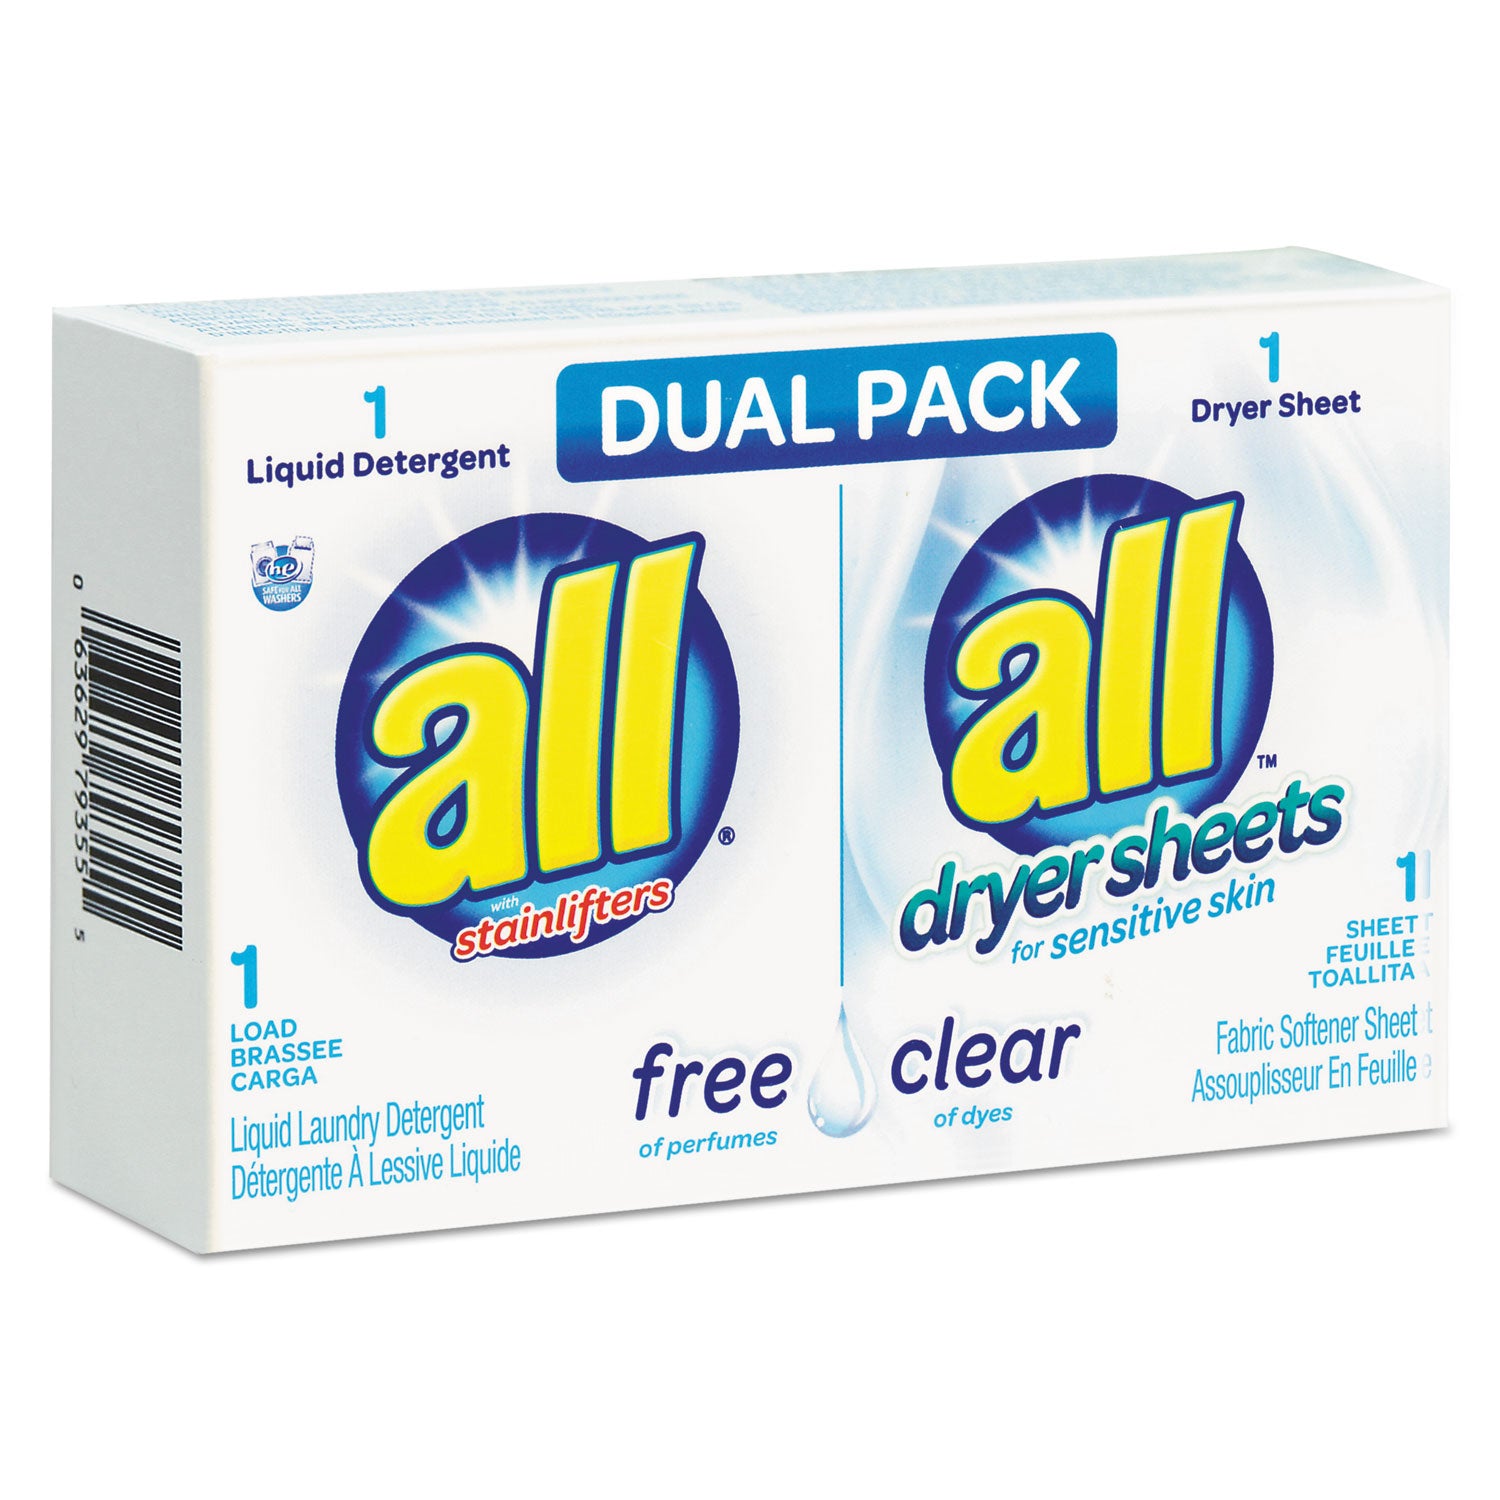 free-clear-he-liquid-laundry-detergent-dryer-sheet-dual-vend-pack-100-ctn_ven2979355 - 1